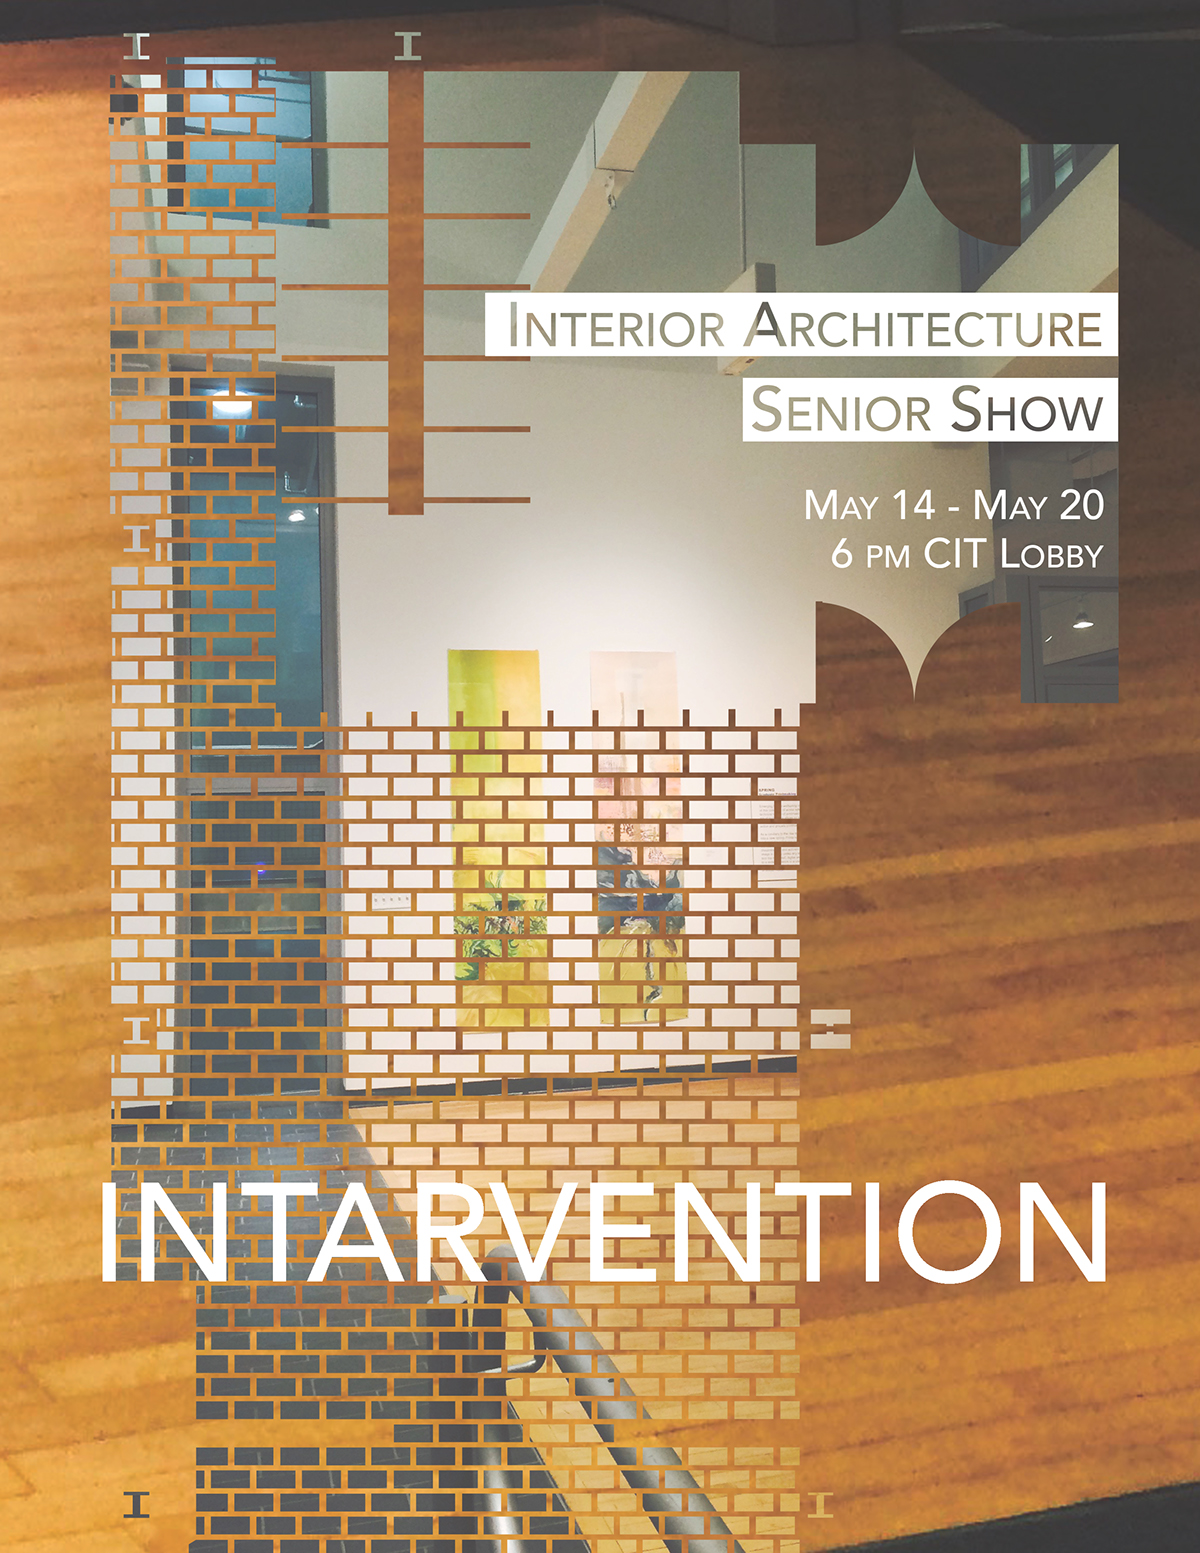 installation laser cut suspention intervention adaptive reuse IntAr risd spring Interior Architecture Senior Show